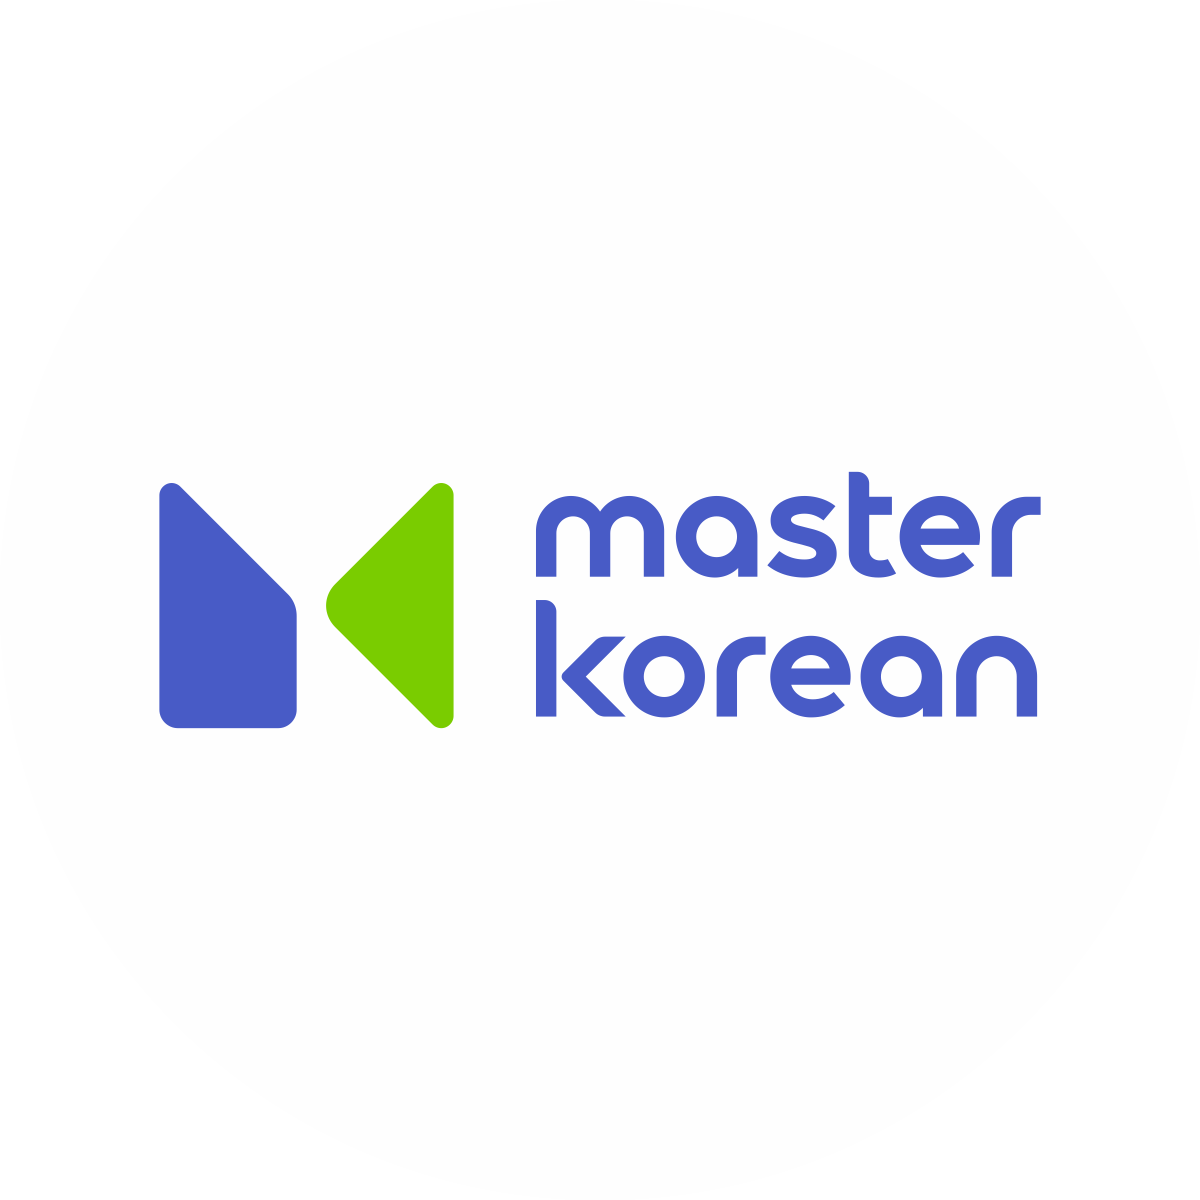 Master Korean